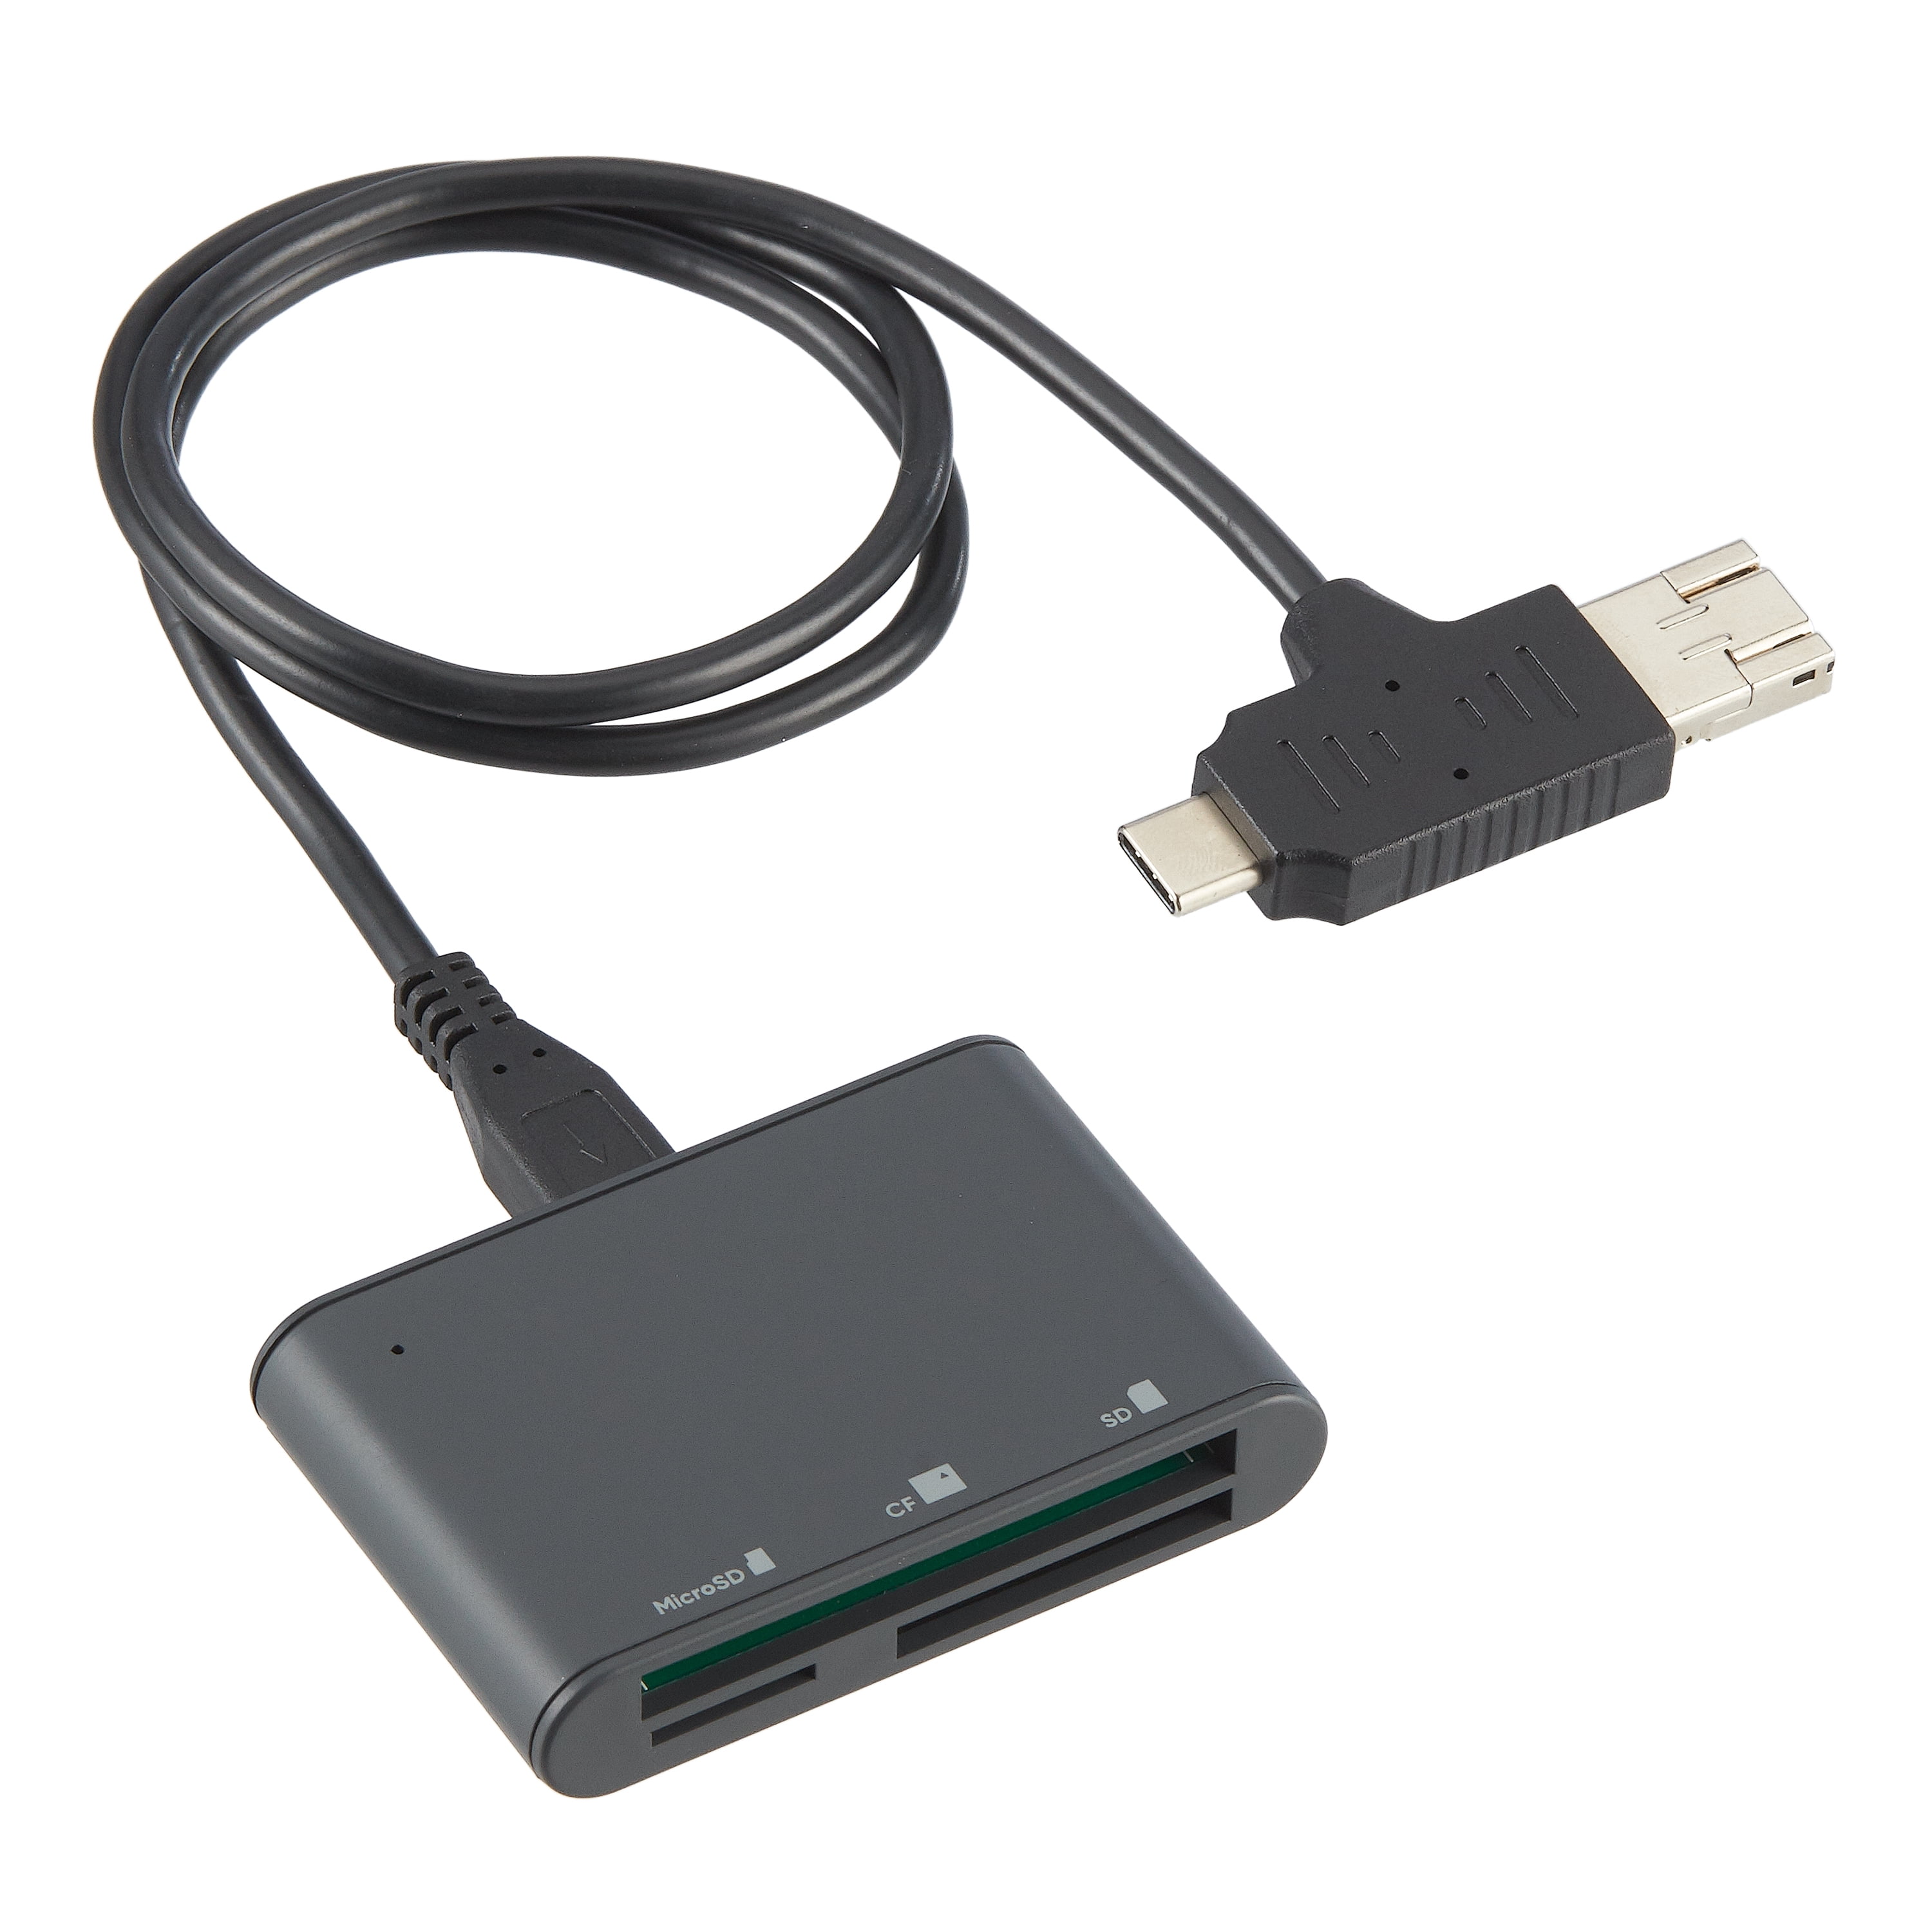 onn. SD, microSD and CompactFlash Card Reader